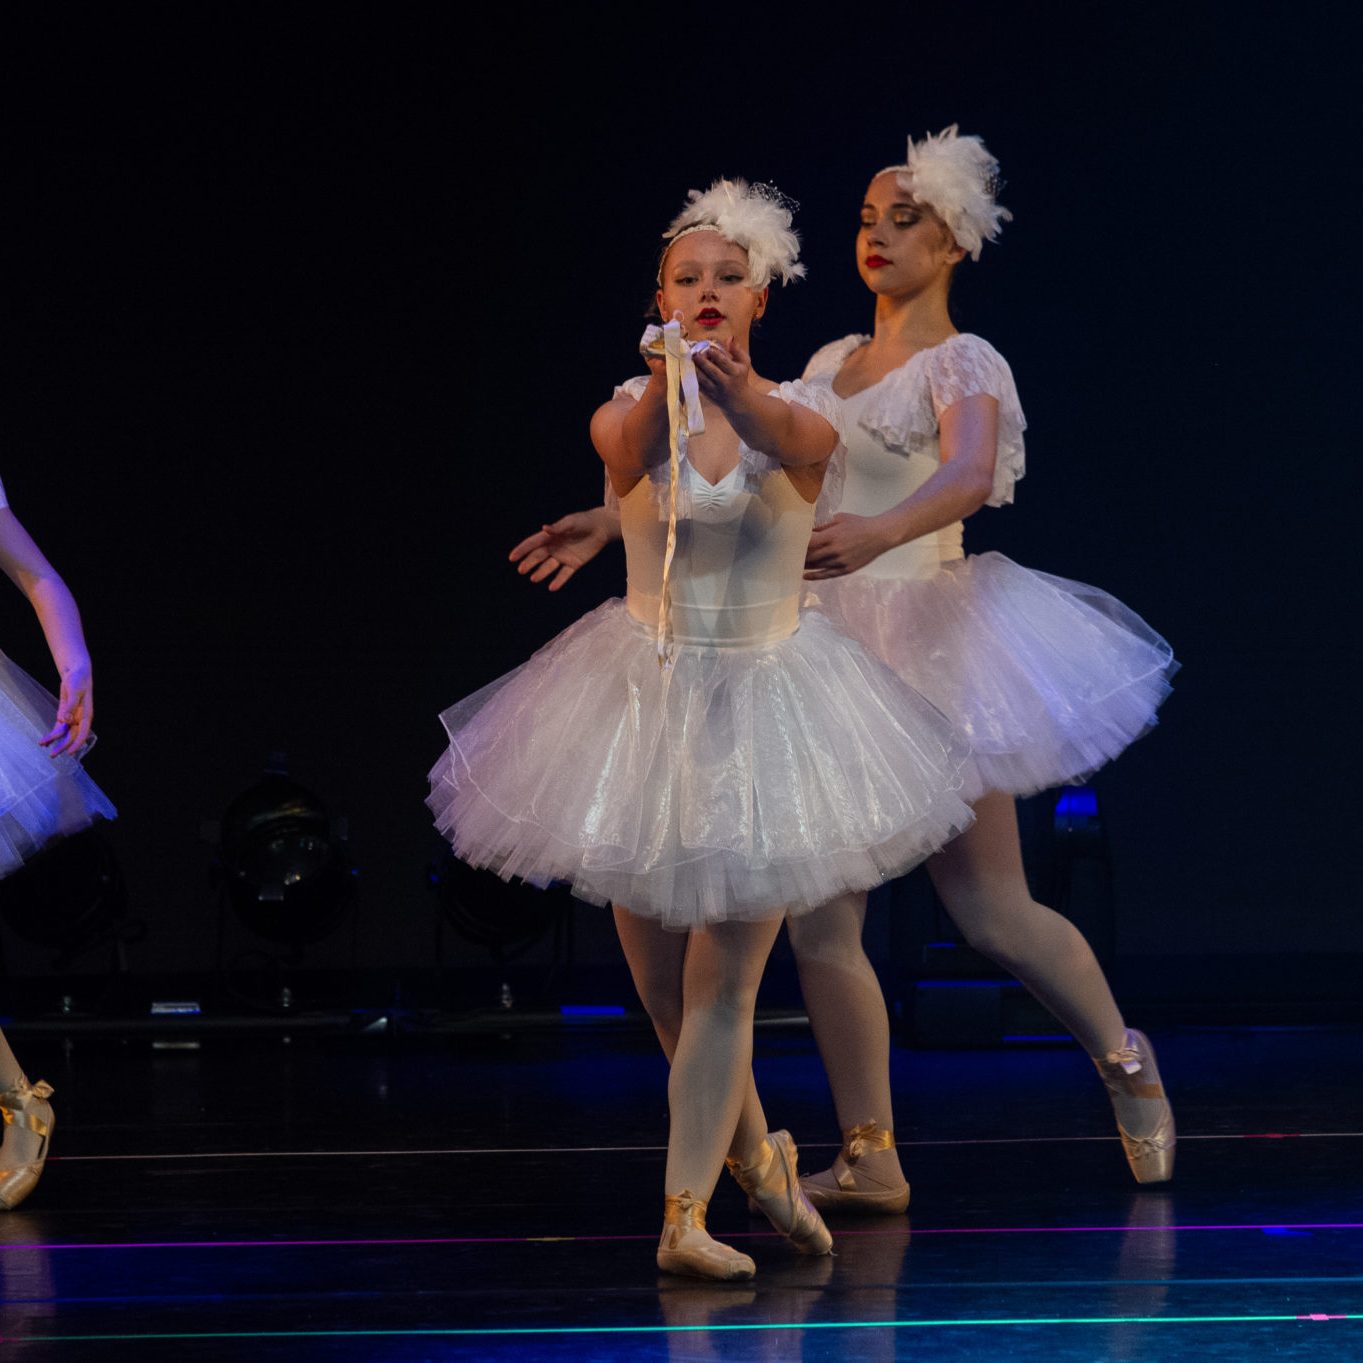 Academie ballet spectacle 2019-GBDSC_9934